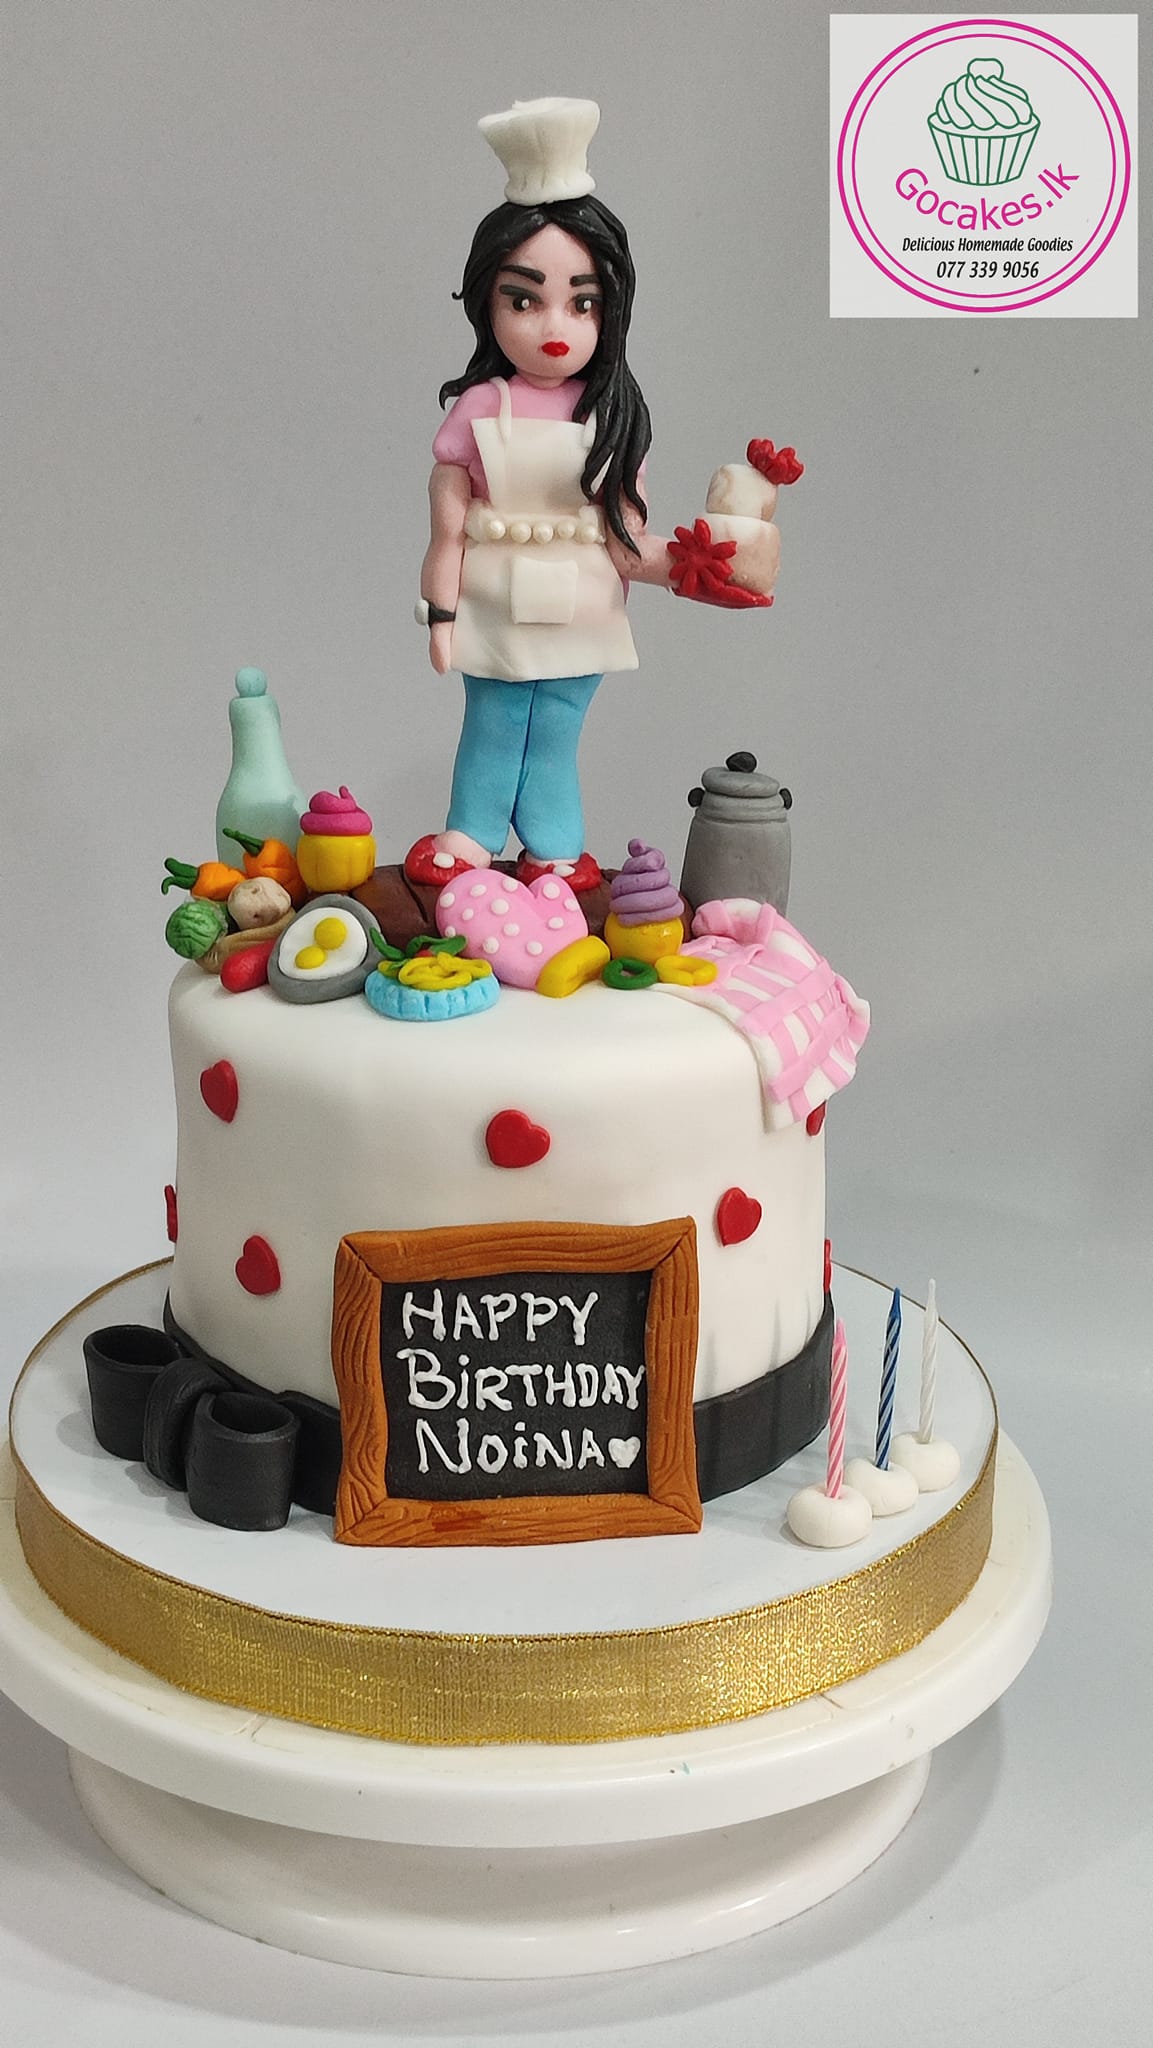 Gift for Chef - Min 2 Kg Cake – SKUCAK169 - Online Gifts Delivery in Dubai  UAE